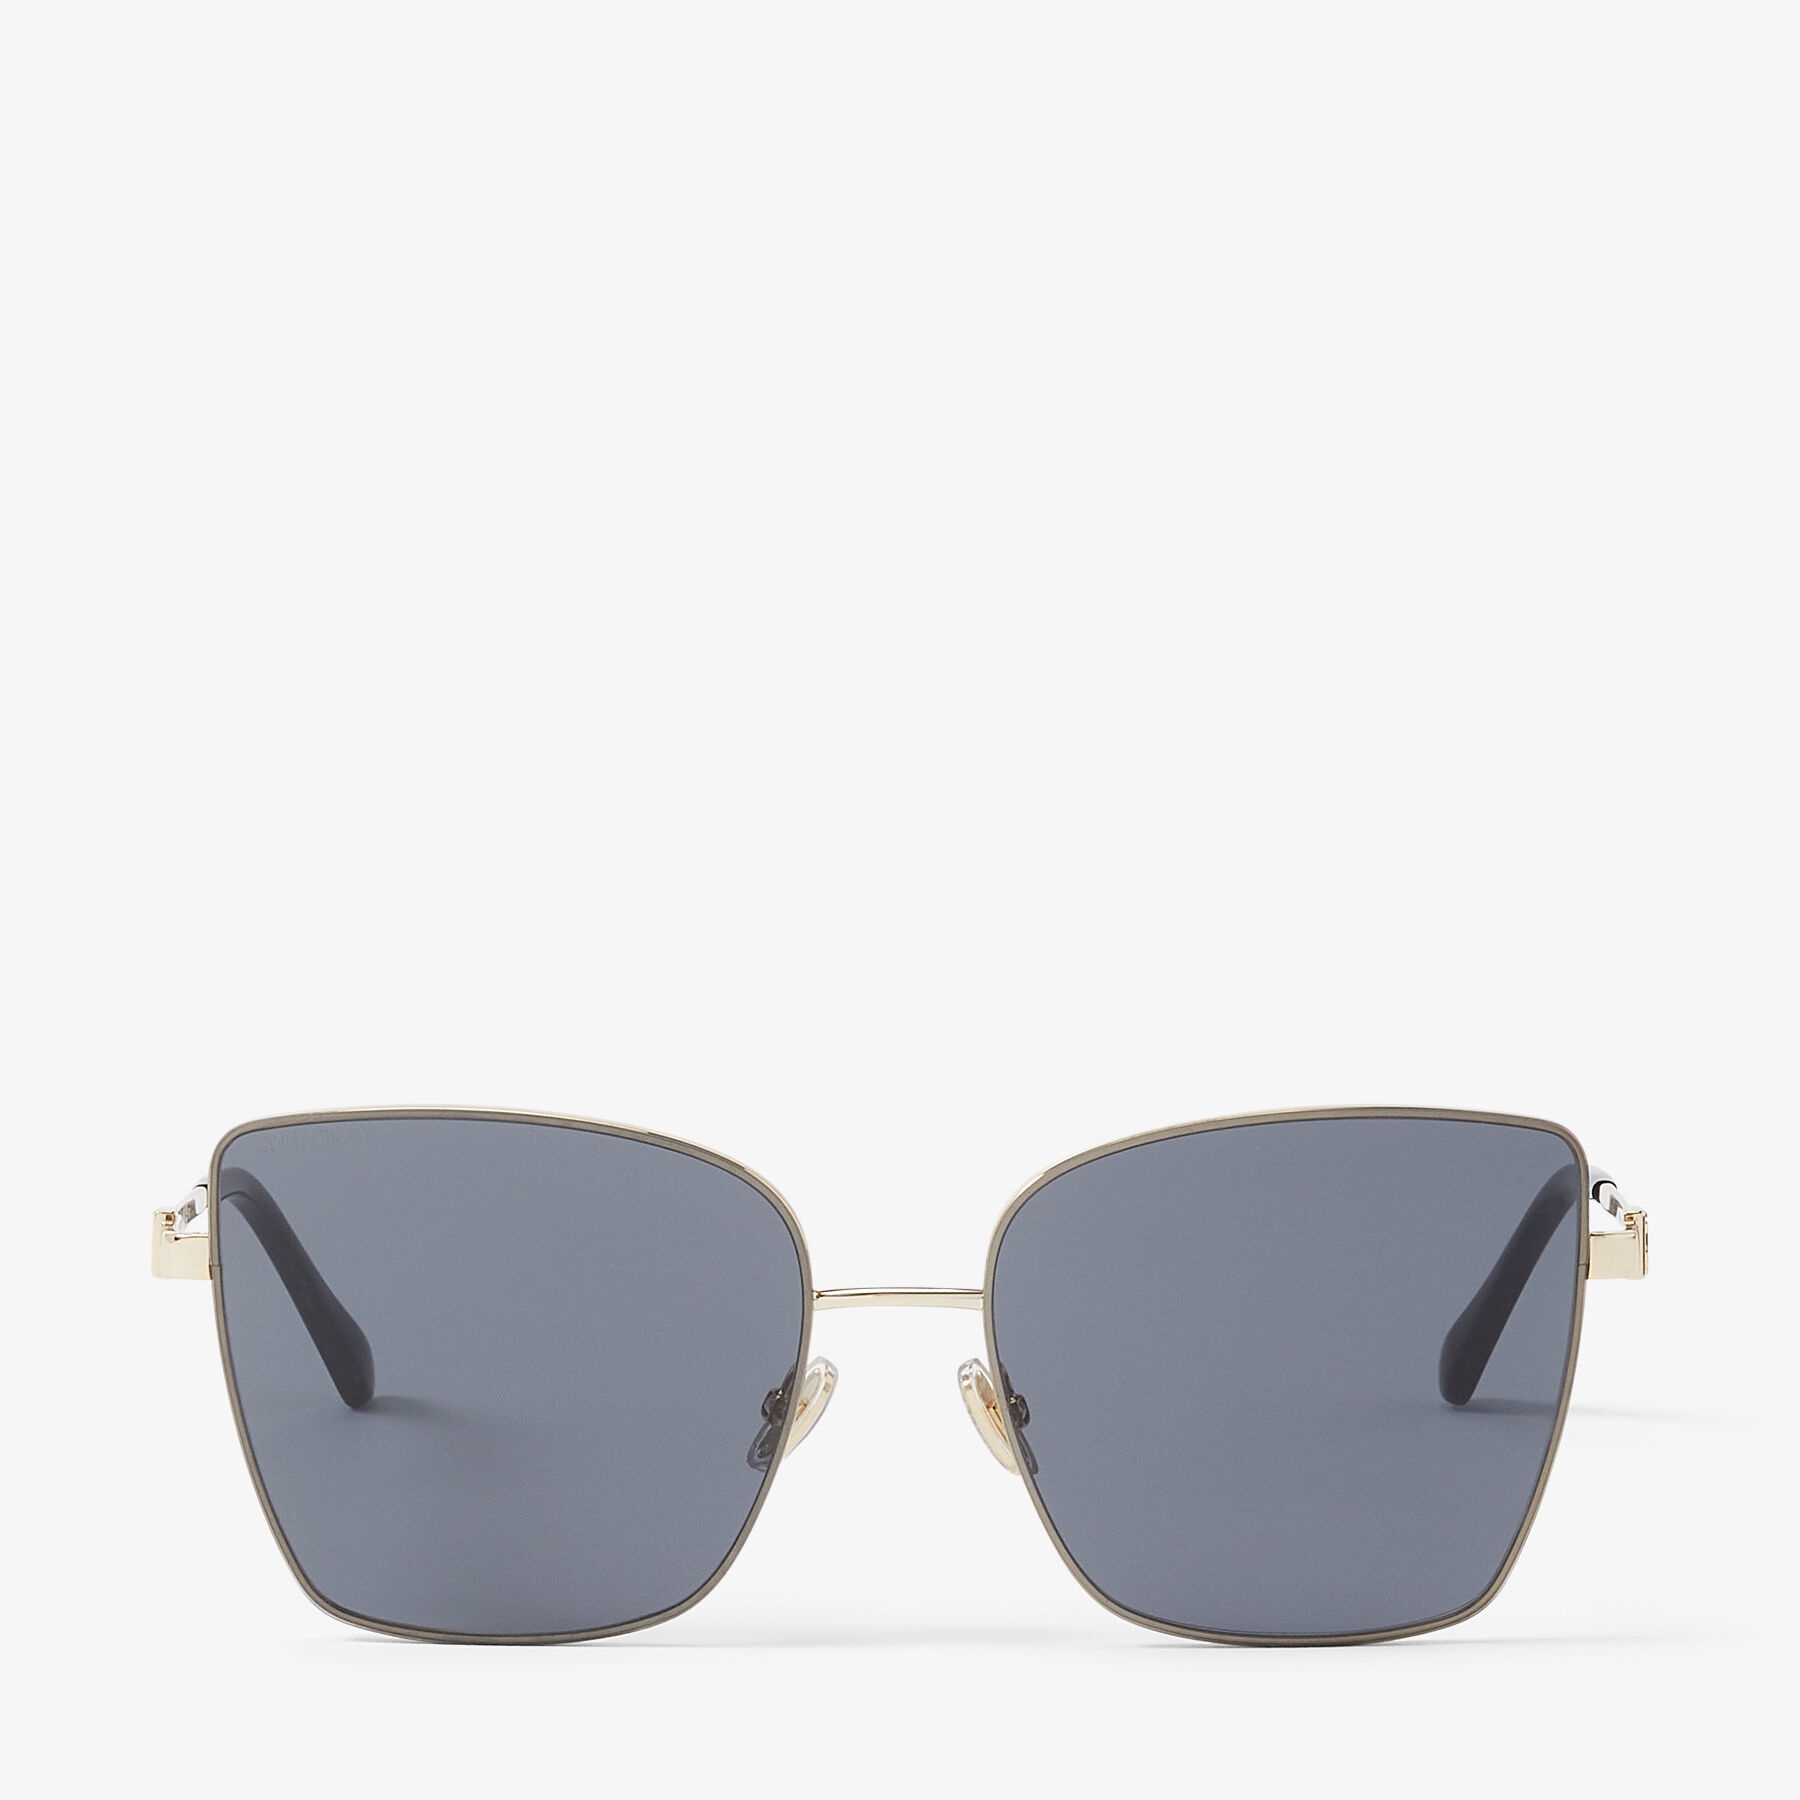 Vella/S 59
Rose Gold and Black Square Frame Sunglasses with JC Emblem - 1